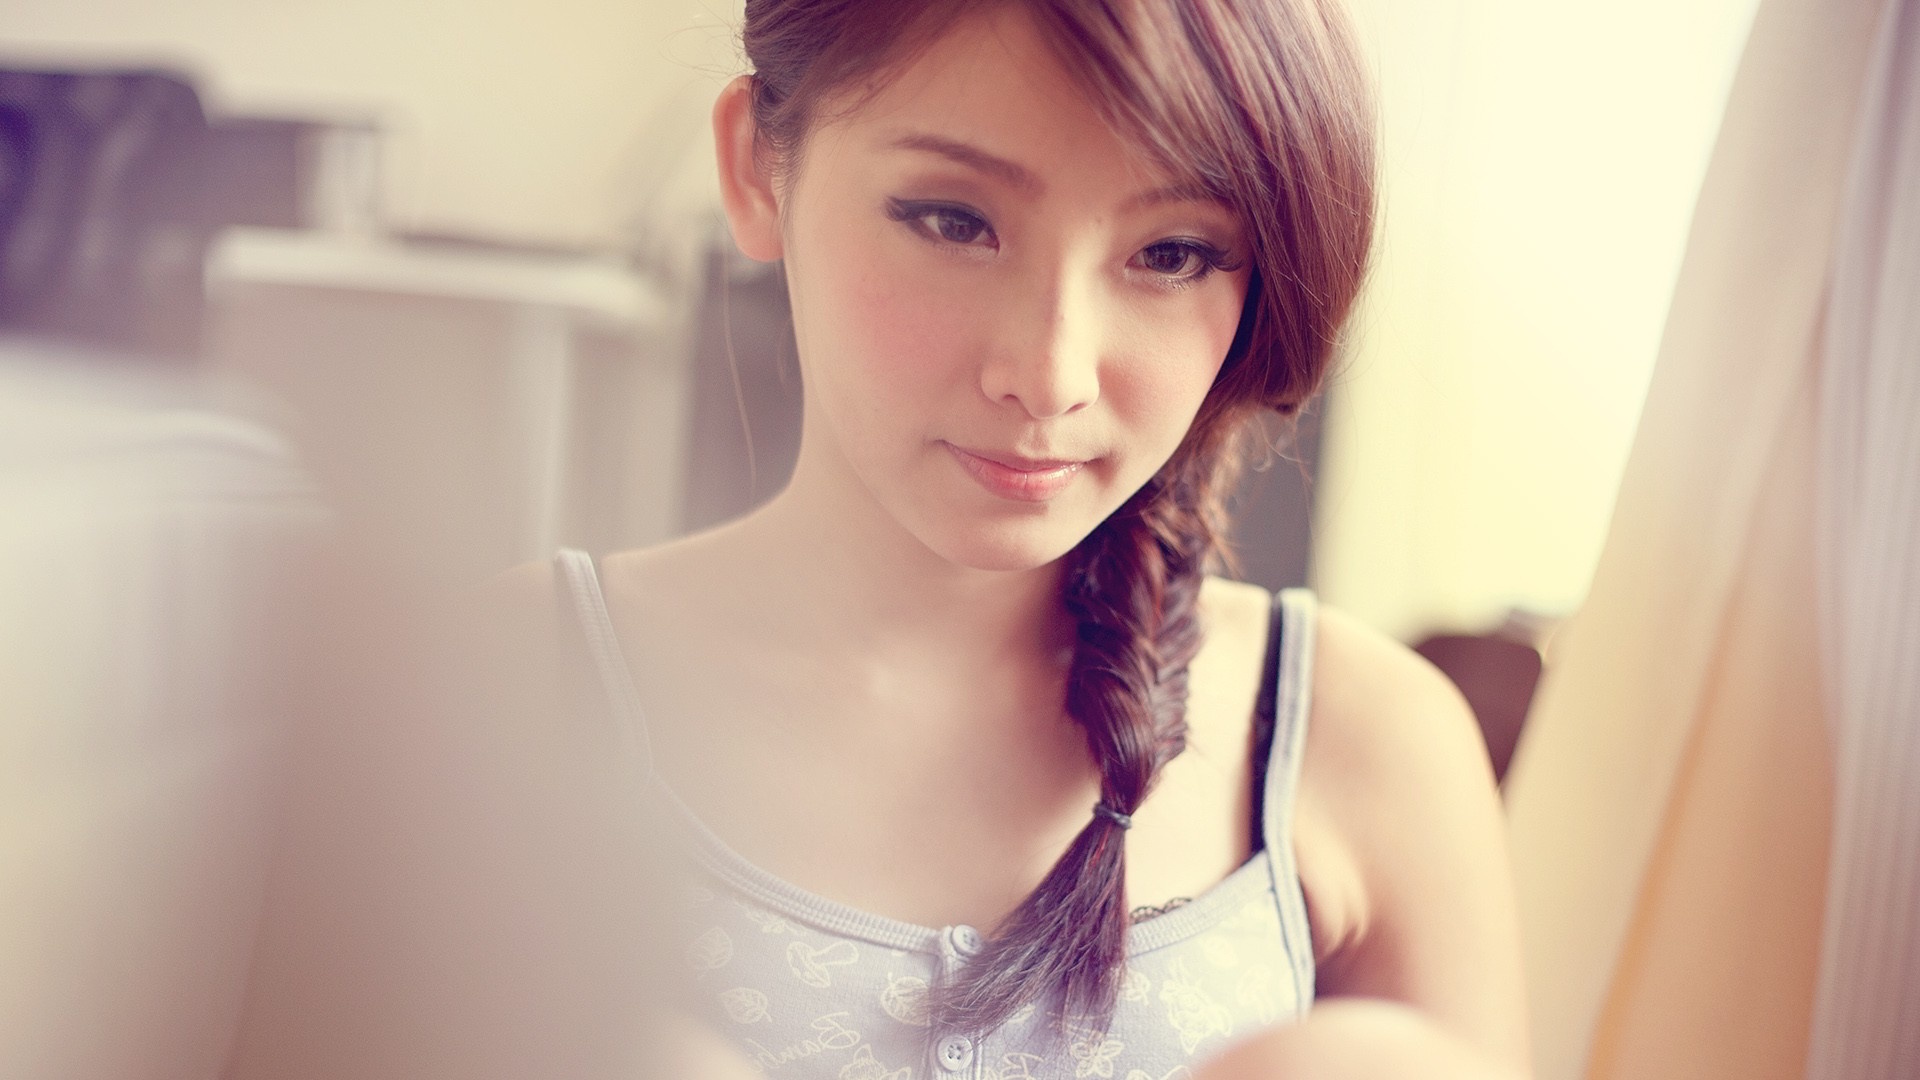 Asian cute girl Wallpaper